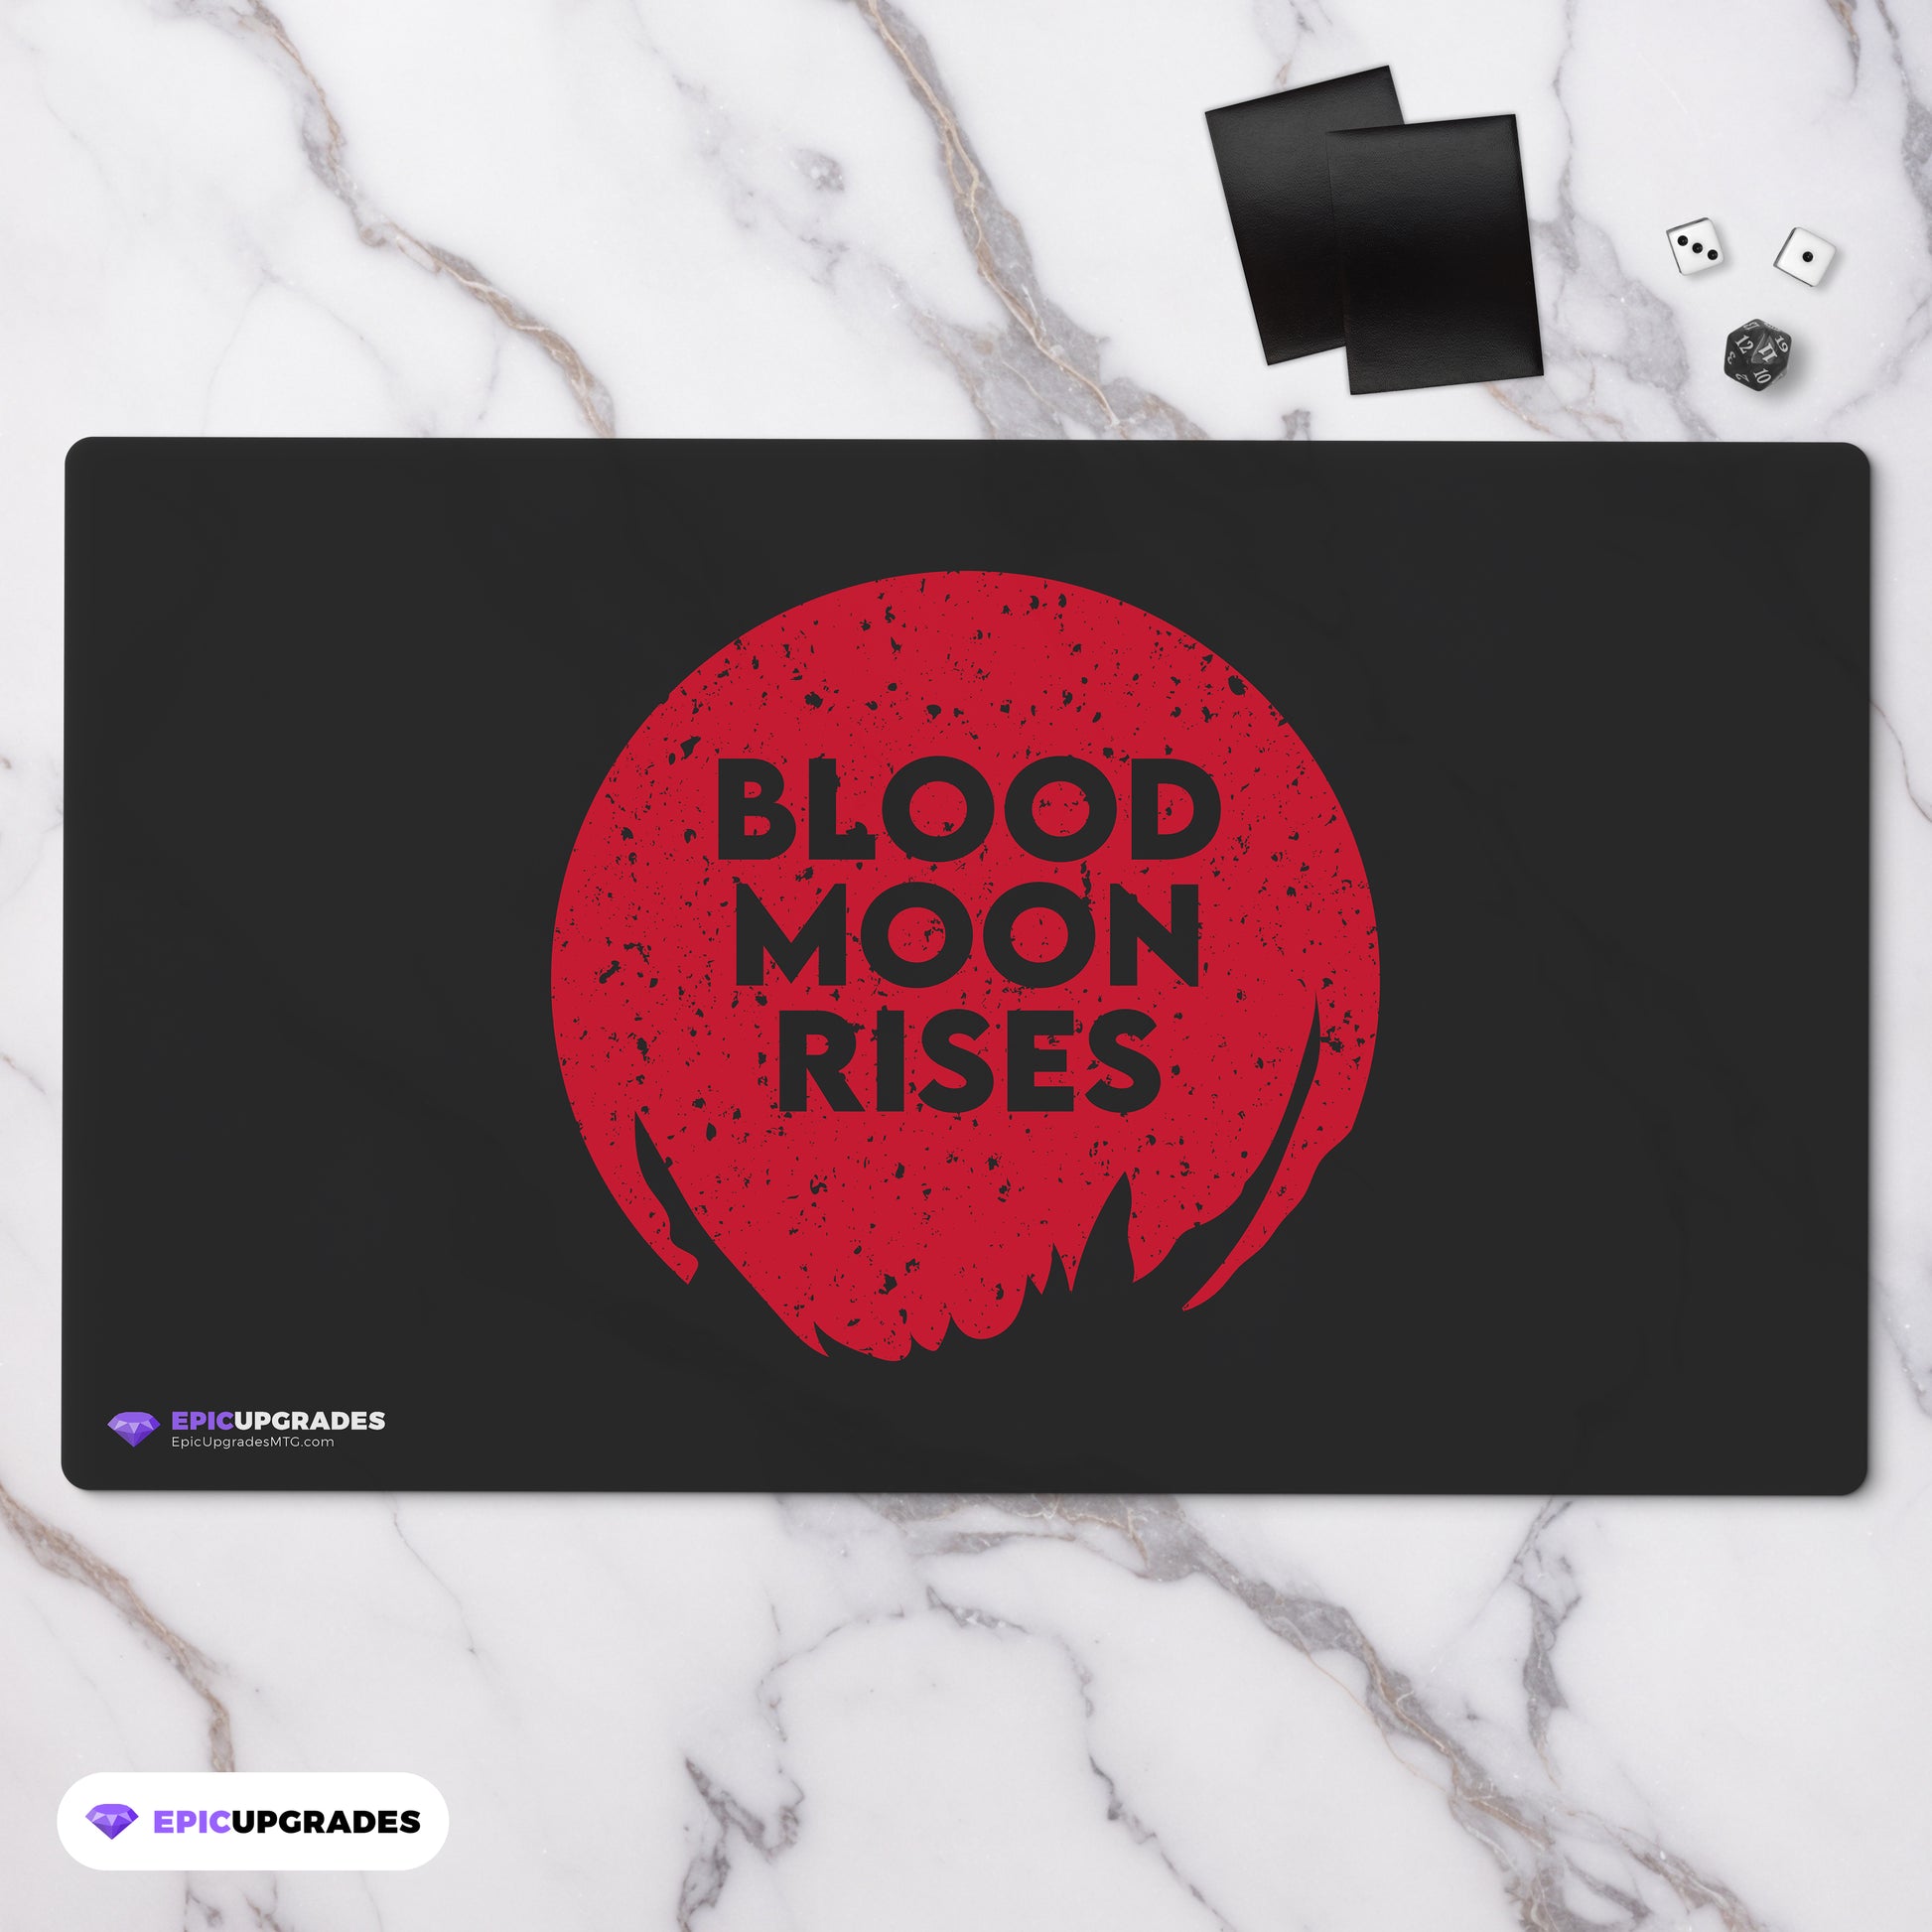 mtg unique gift idea - blood moon rises